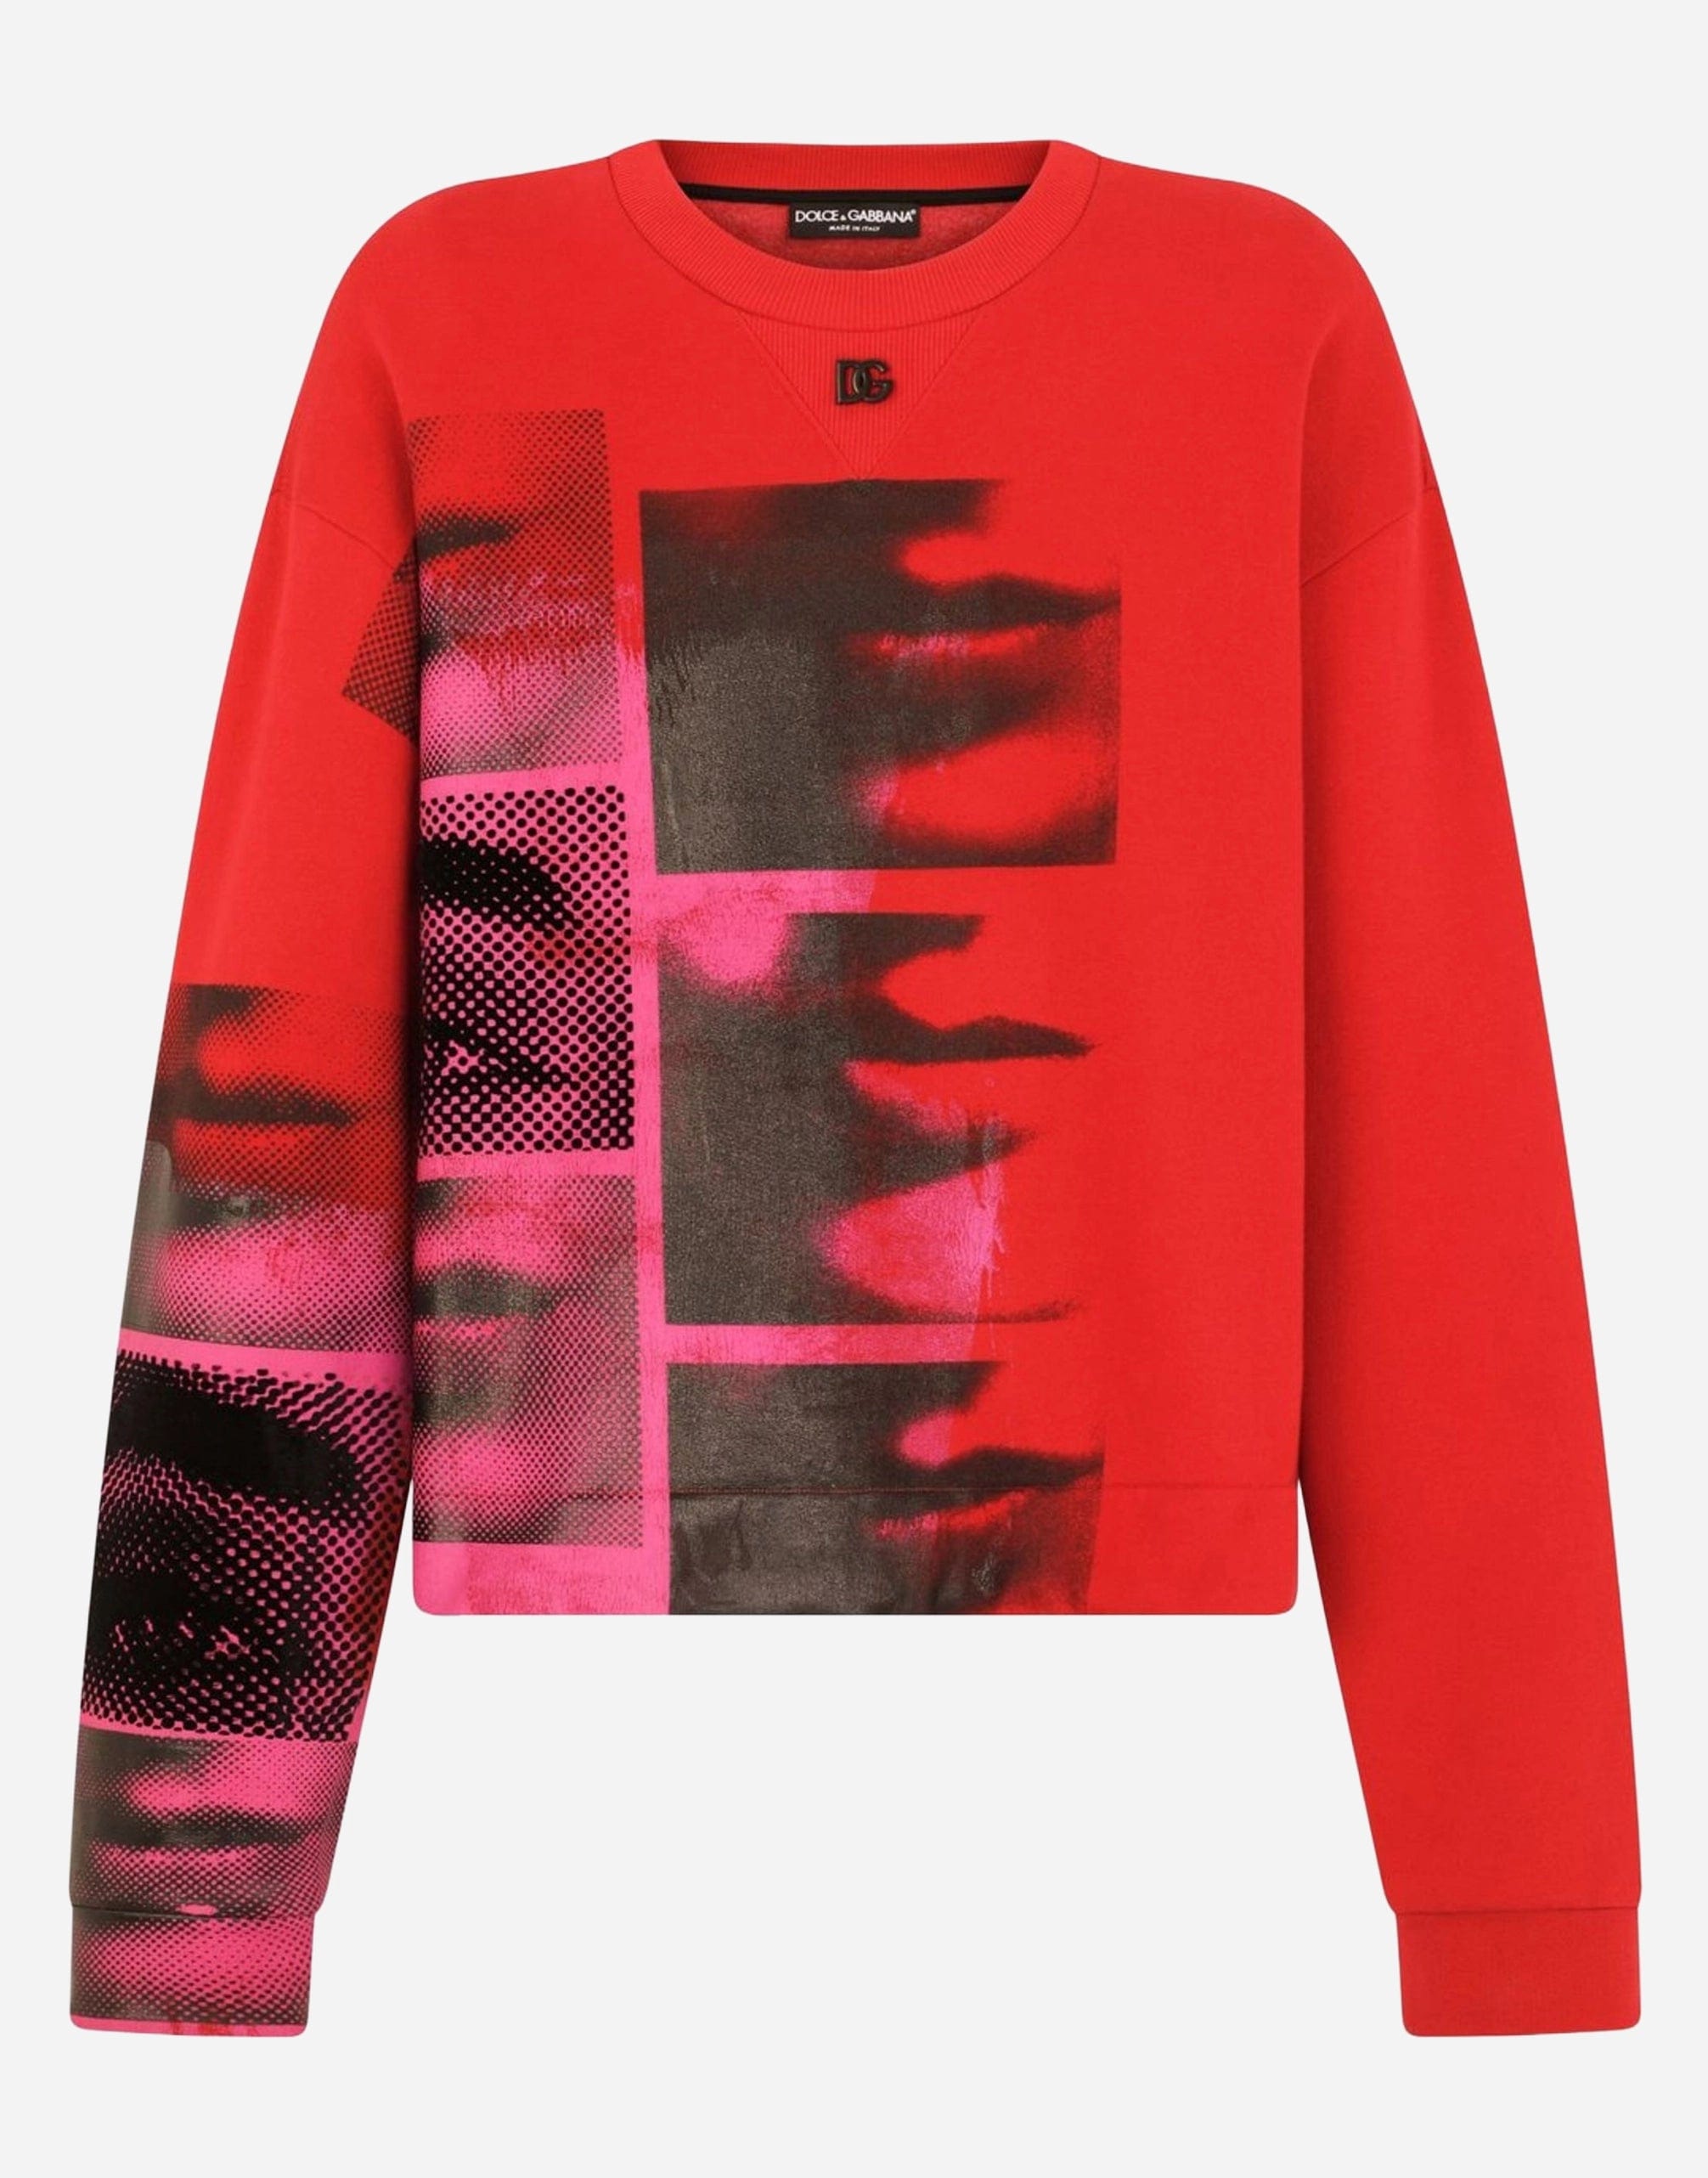 Dolce & Gabbana Look At Me Graphic-Print Sweatshirt